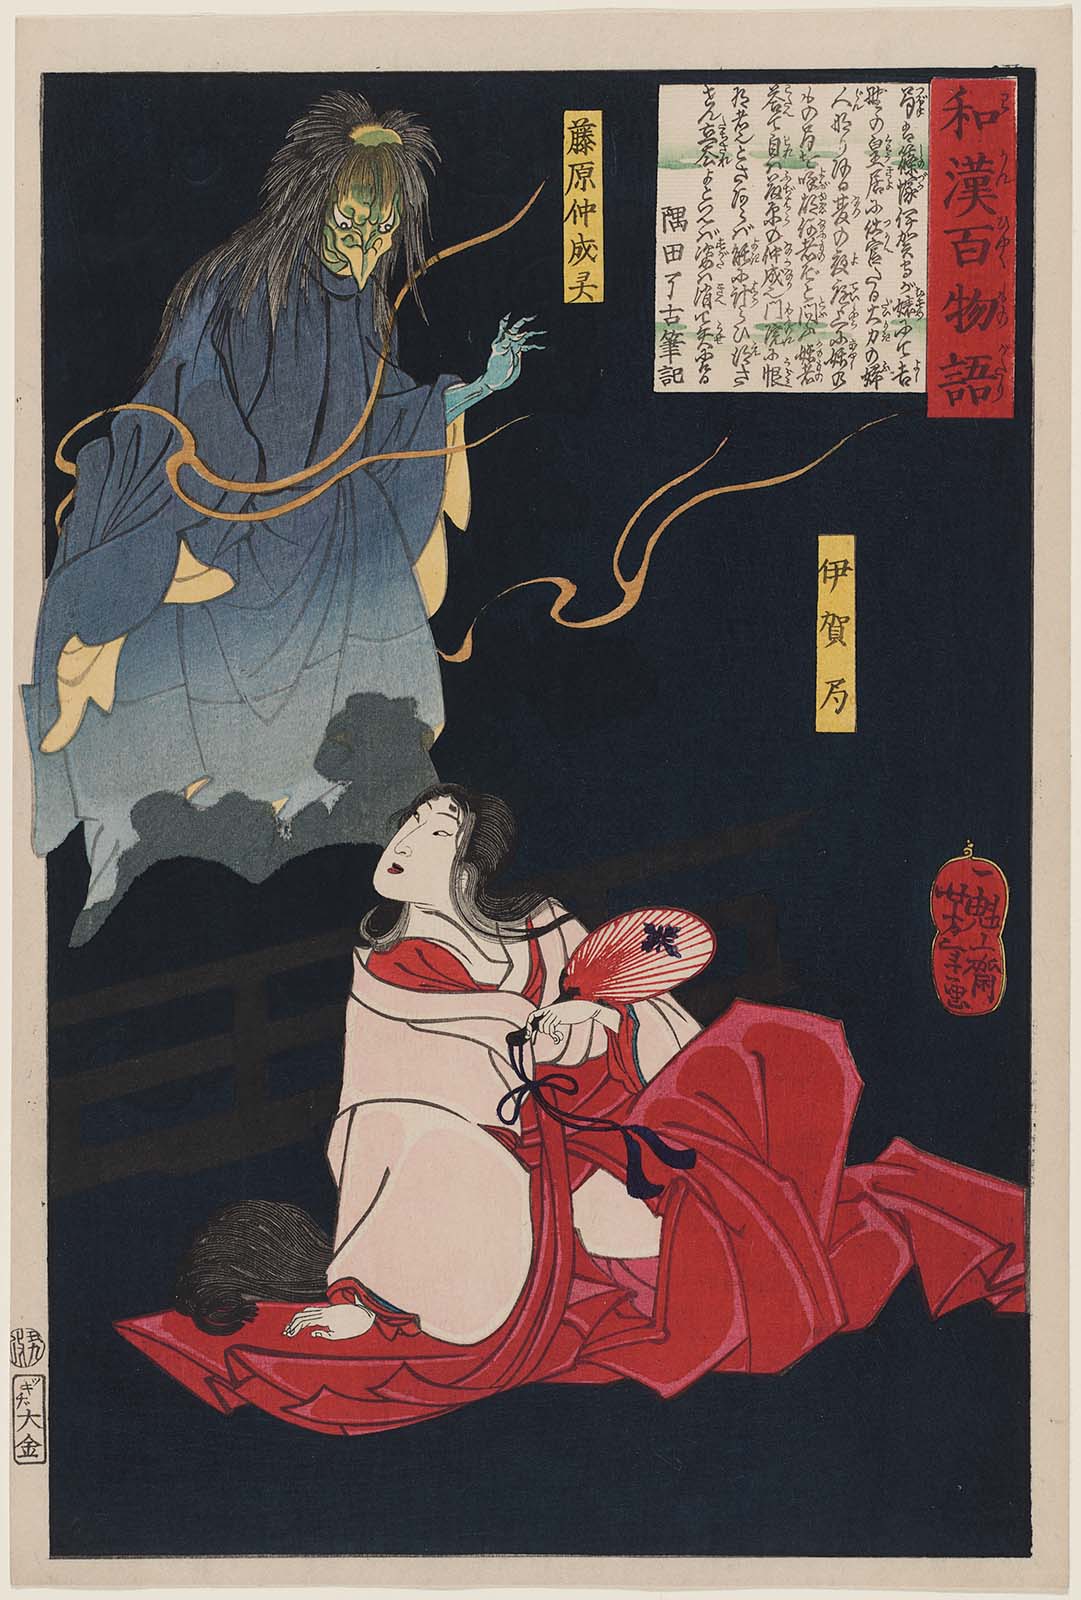 Yoshitoshi - Iga no Tsubone with tengu – alternate (possibly first printing) with fence behind Iga no Tsubone - One hundred ghost stories of China and Japan